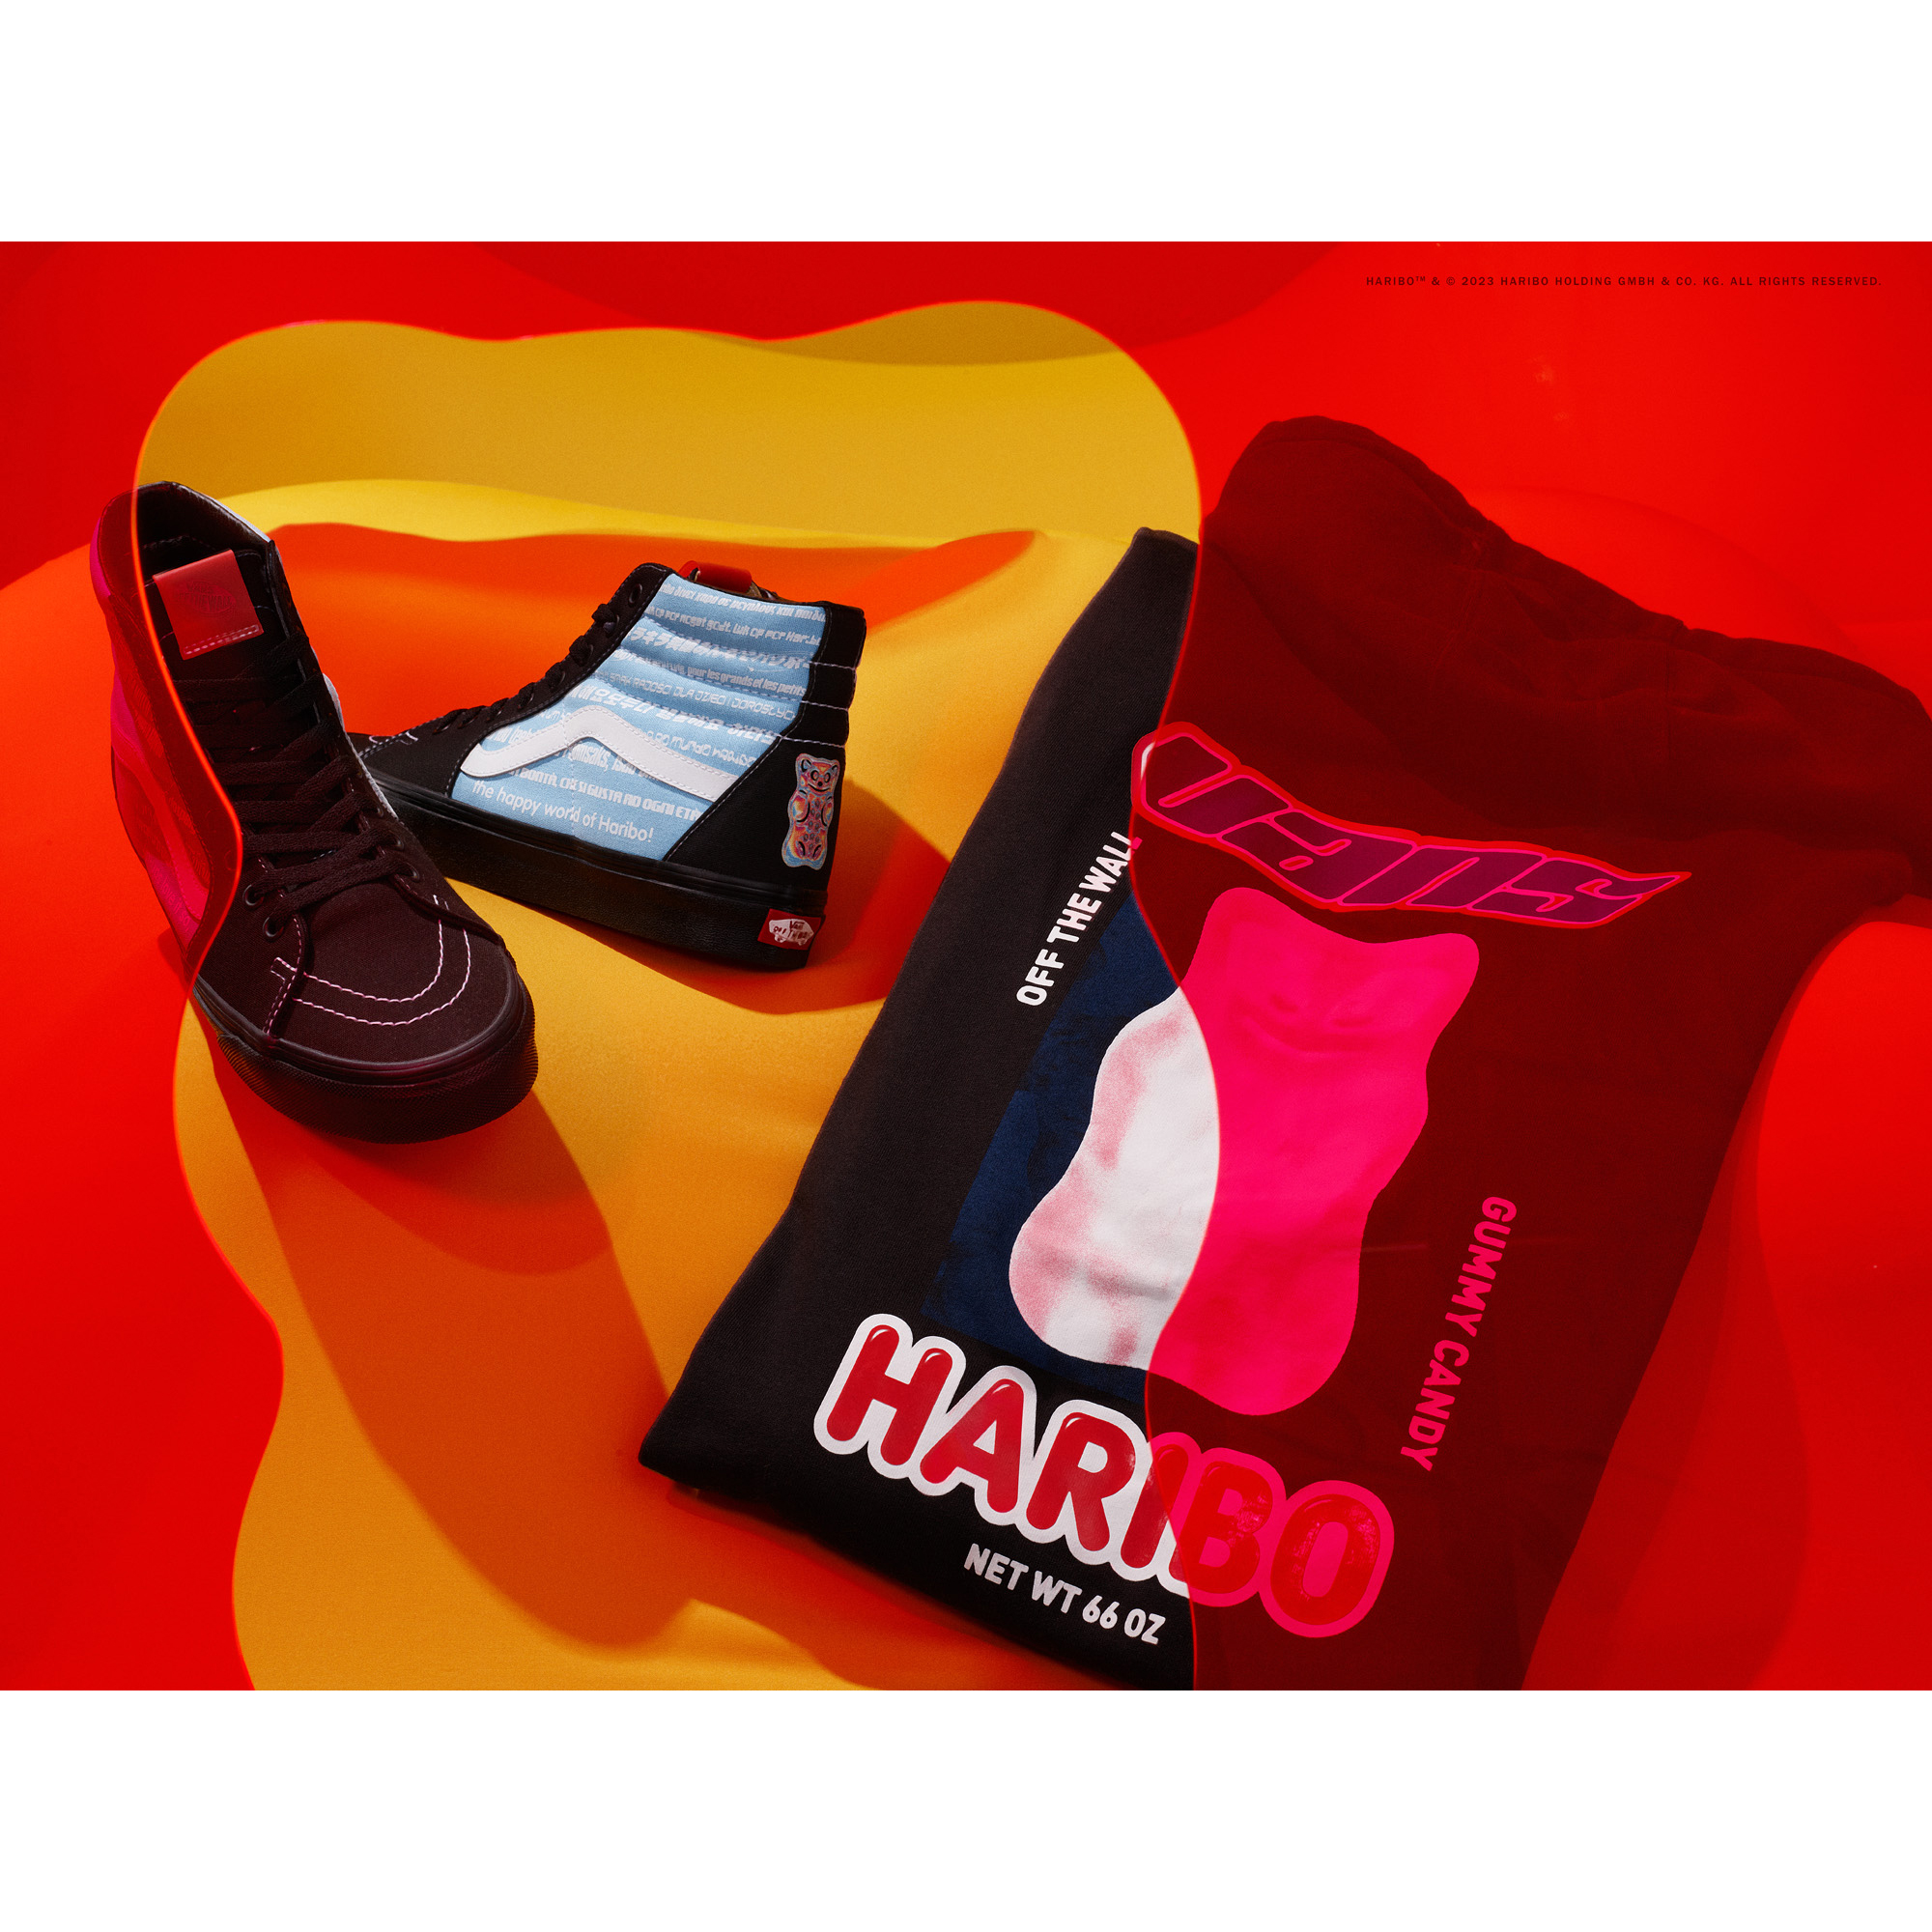 Haribo x Vans Collection | Nice Kicks